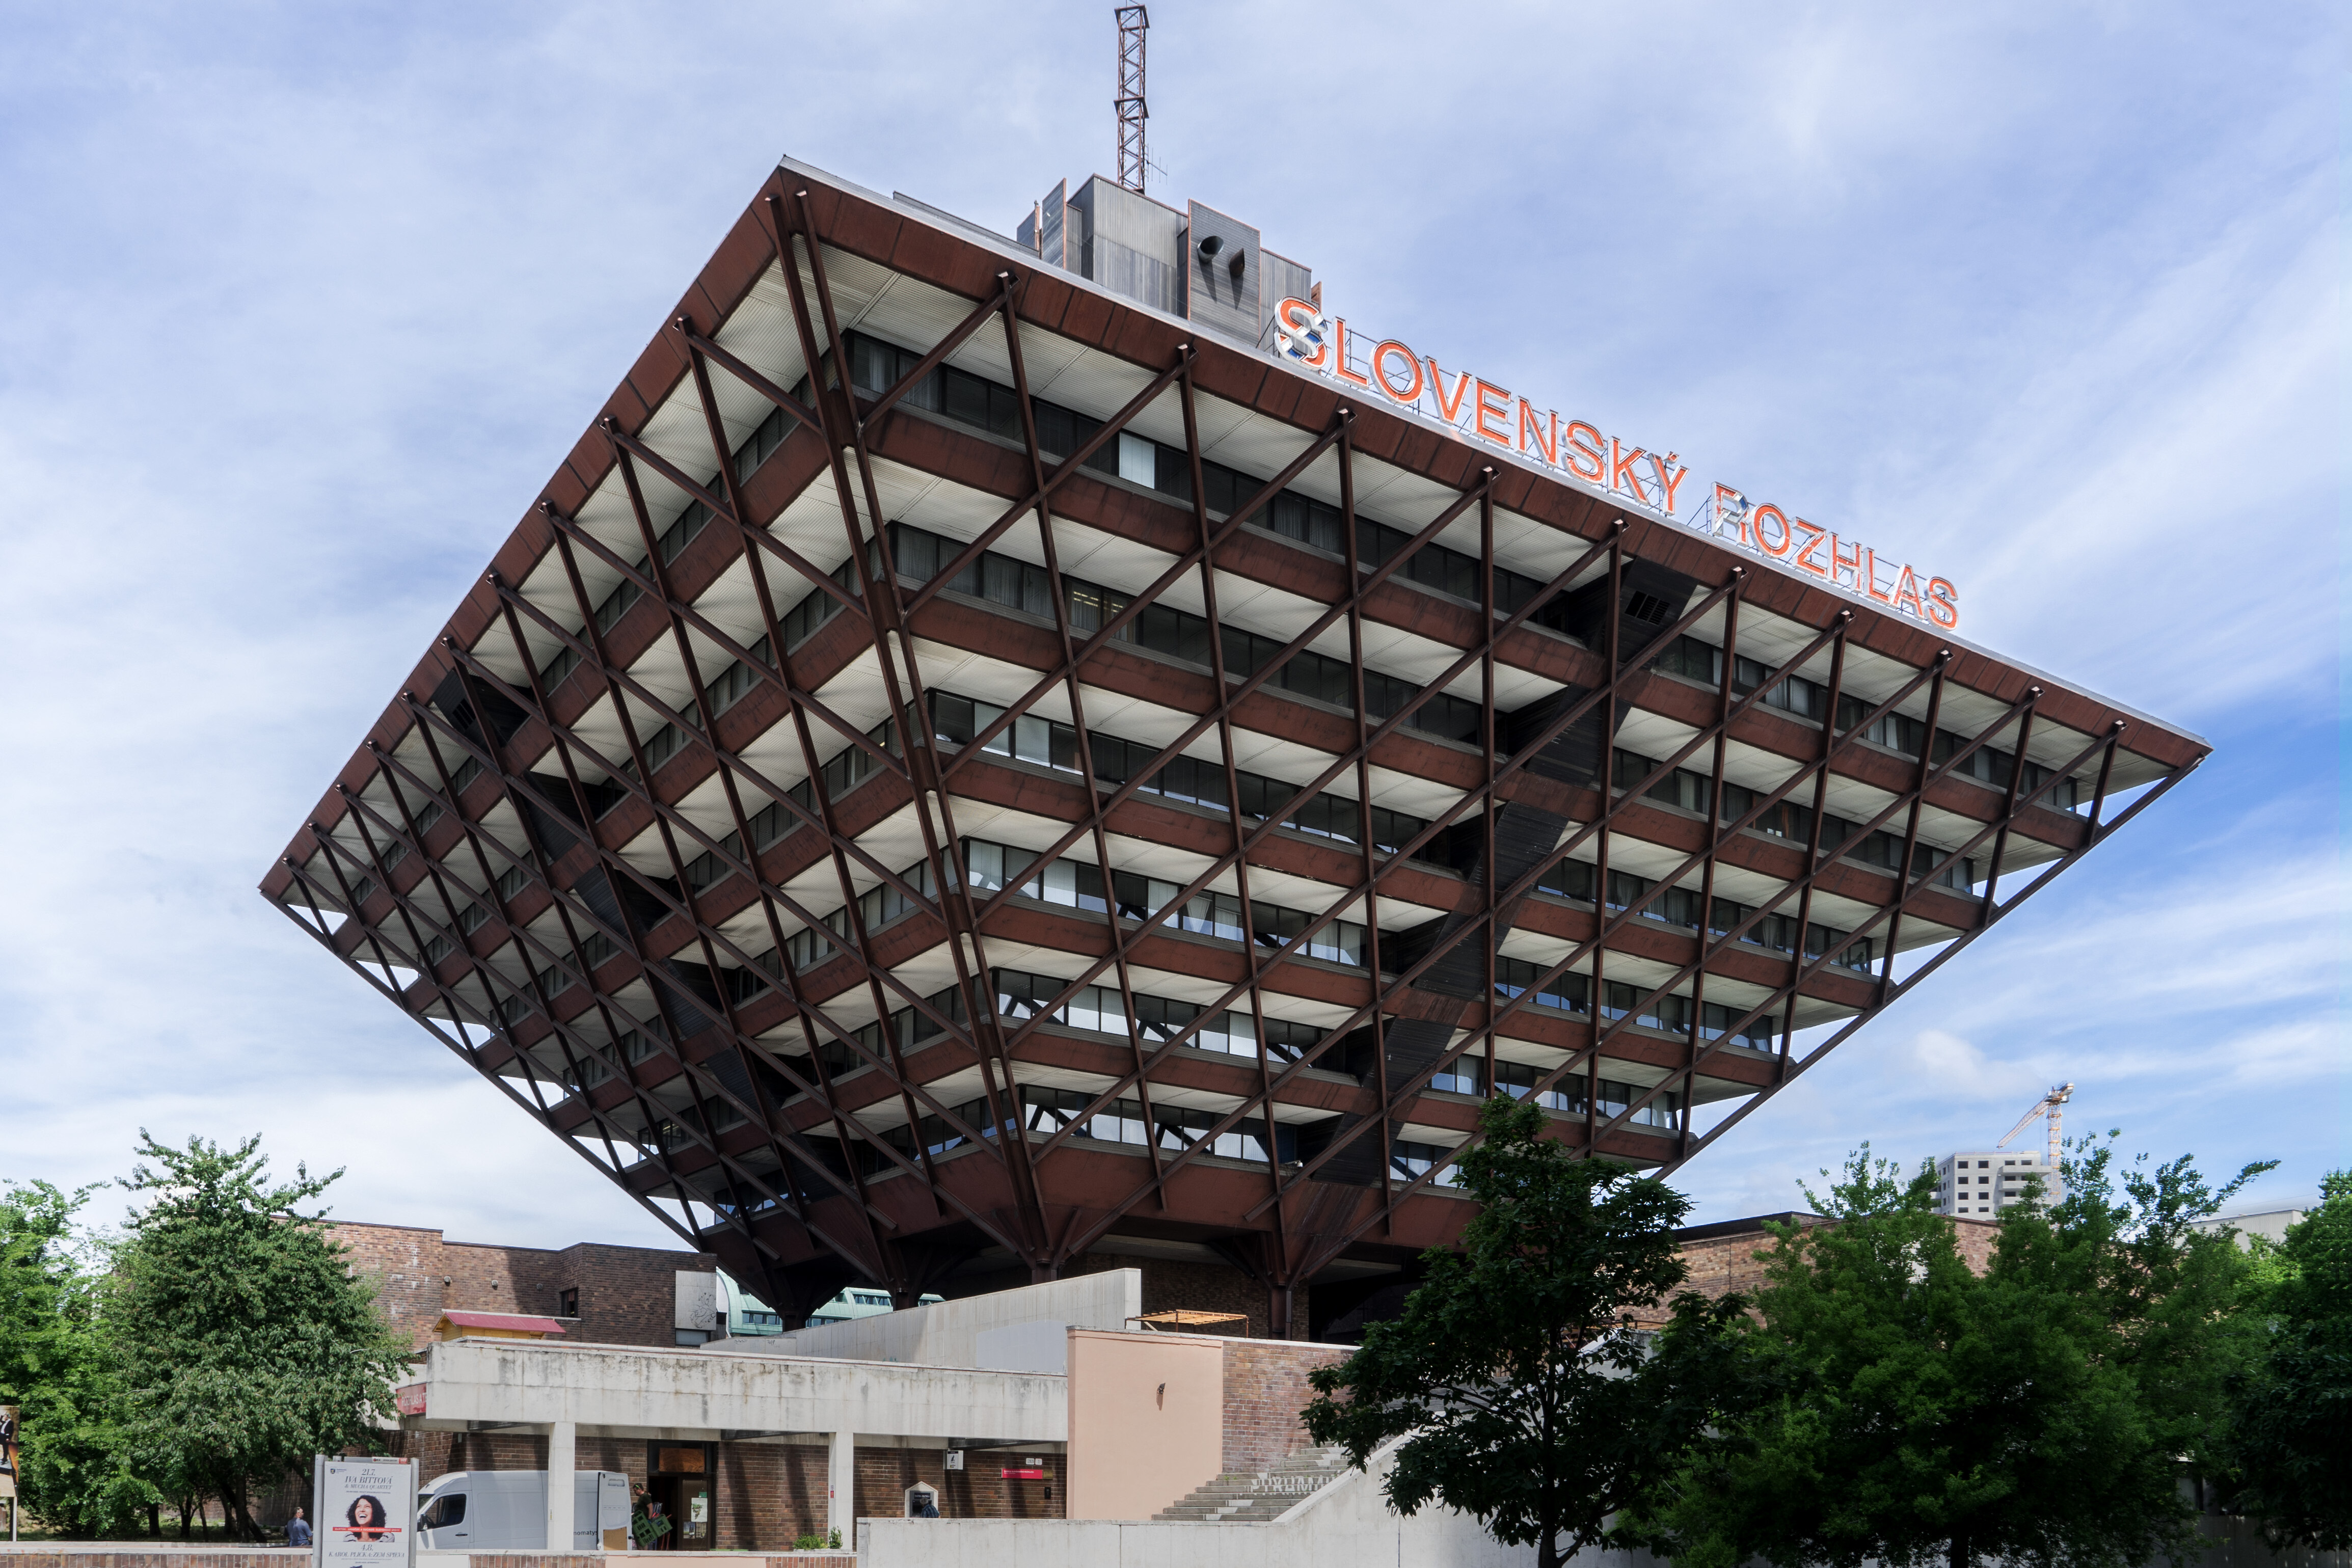 Slovak public broadcaster building